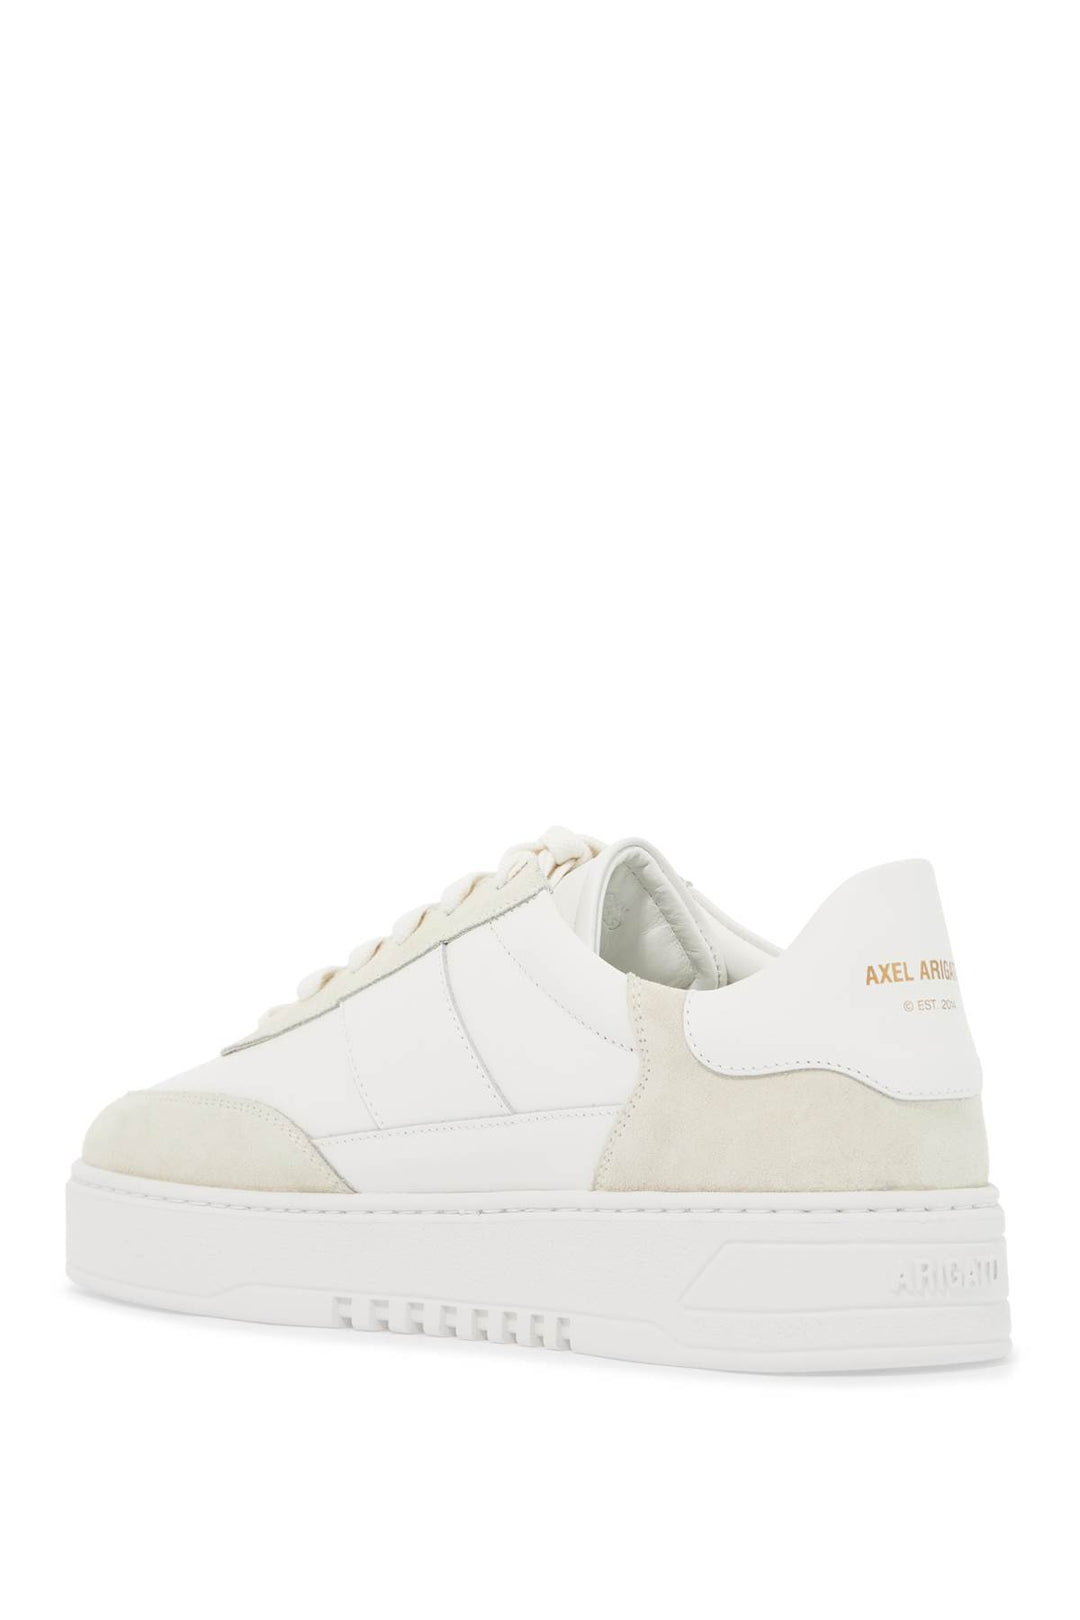 Axel Arigato Vintage Orbit Sneakers Collection   White